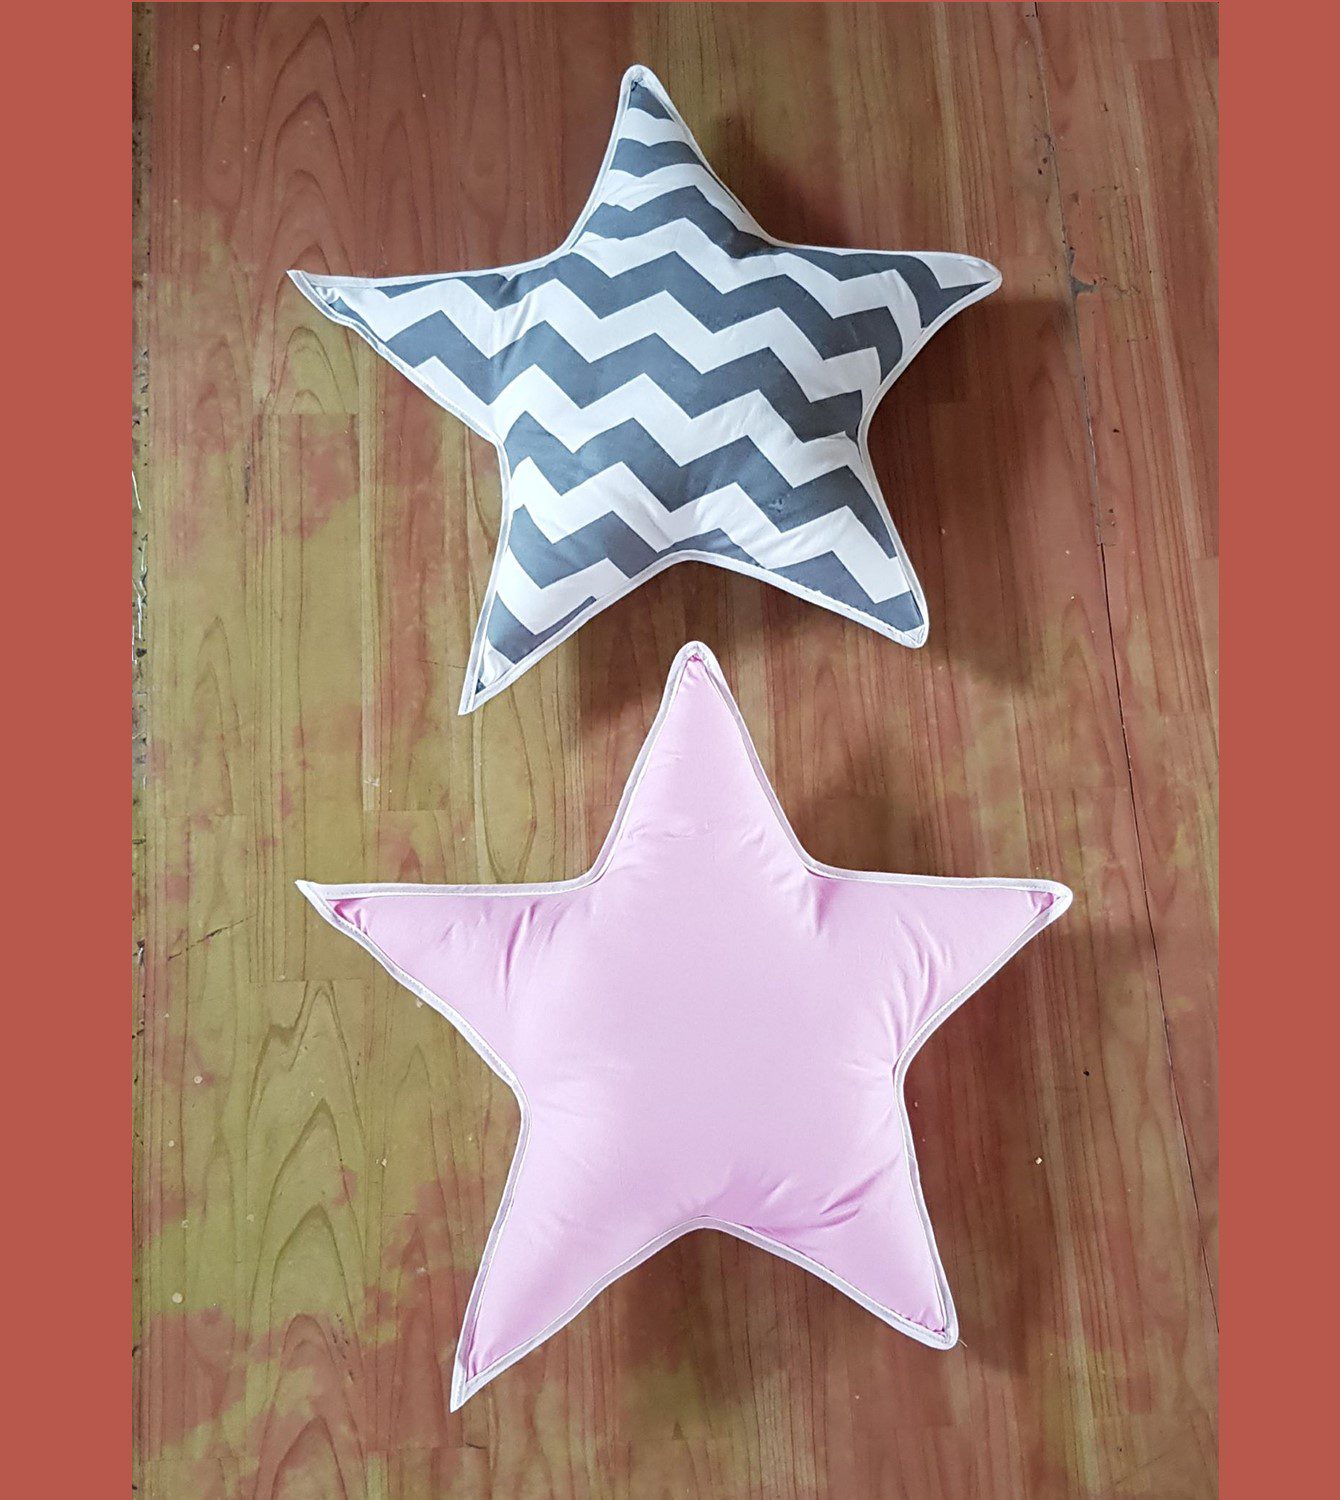 star pillows for children